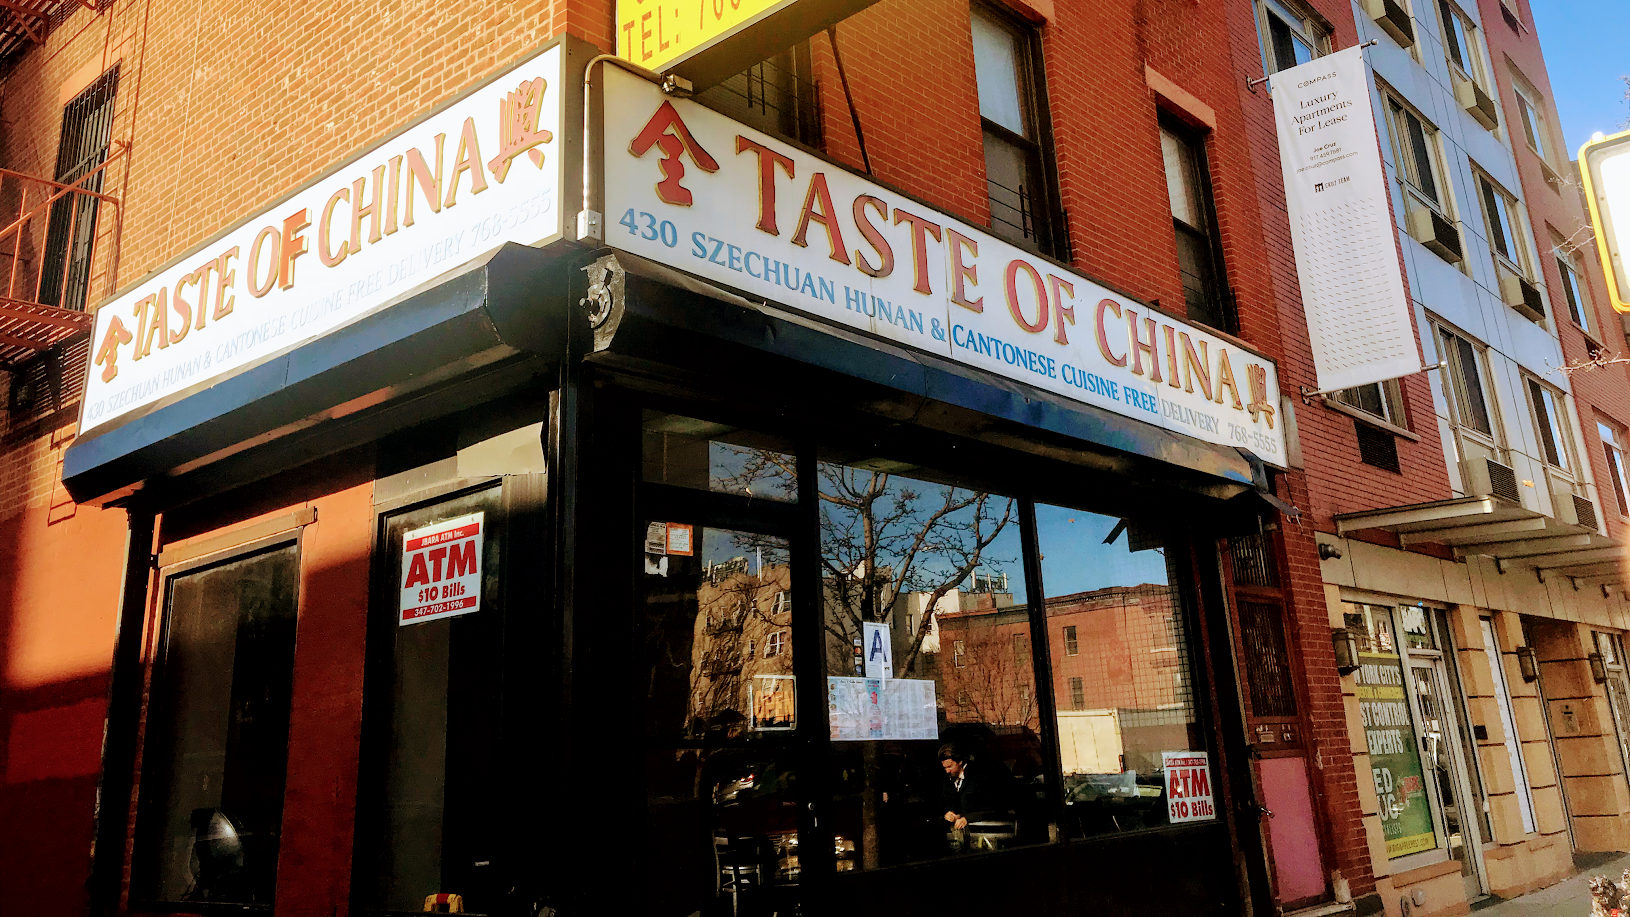 Taste of China Brooklyn